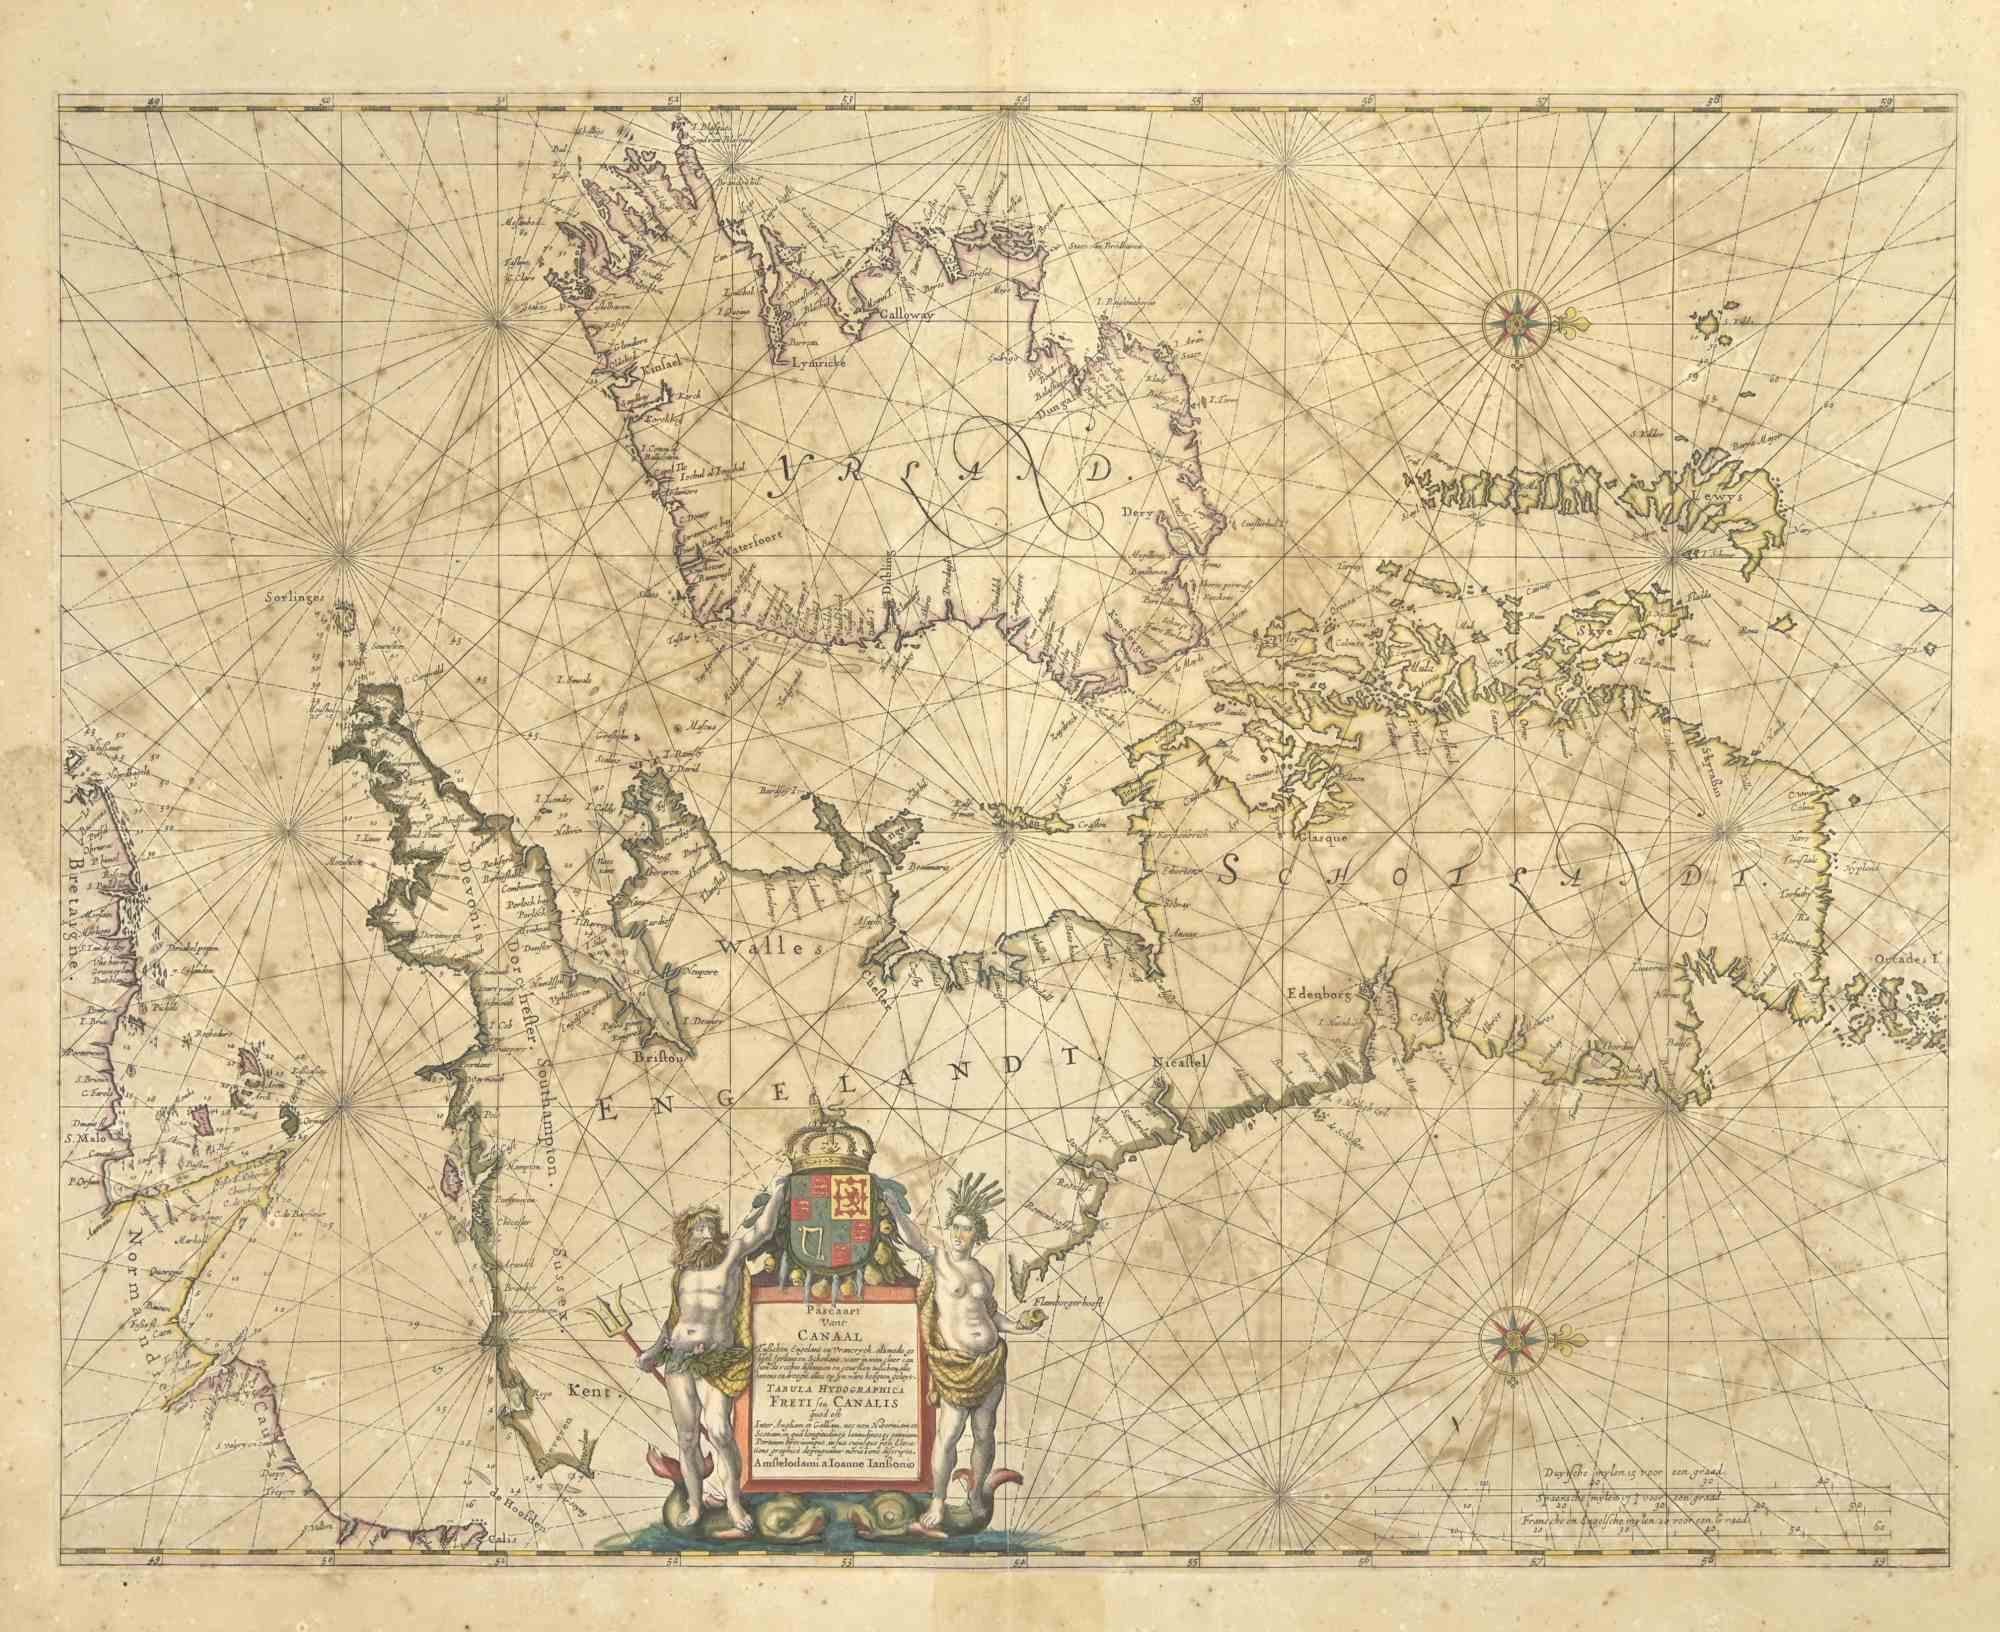 Freti Canalis is an ancient map realized in 1650 by Johannes Janssonius (1588-1664).

Good conditions.

From Atlantis majoris quinta pars, Orbem maritimum [Novus Atlas, volume V: carte marittime]. Amsterdam: Janssonius, 1650. Technique is etching